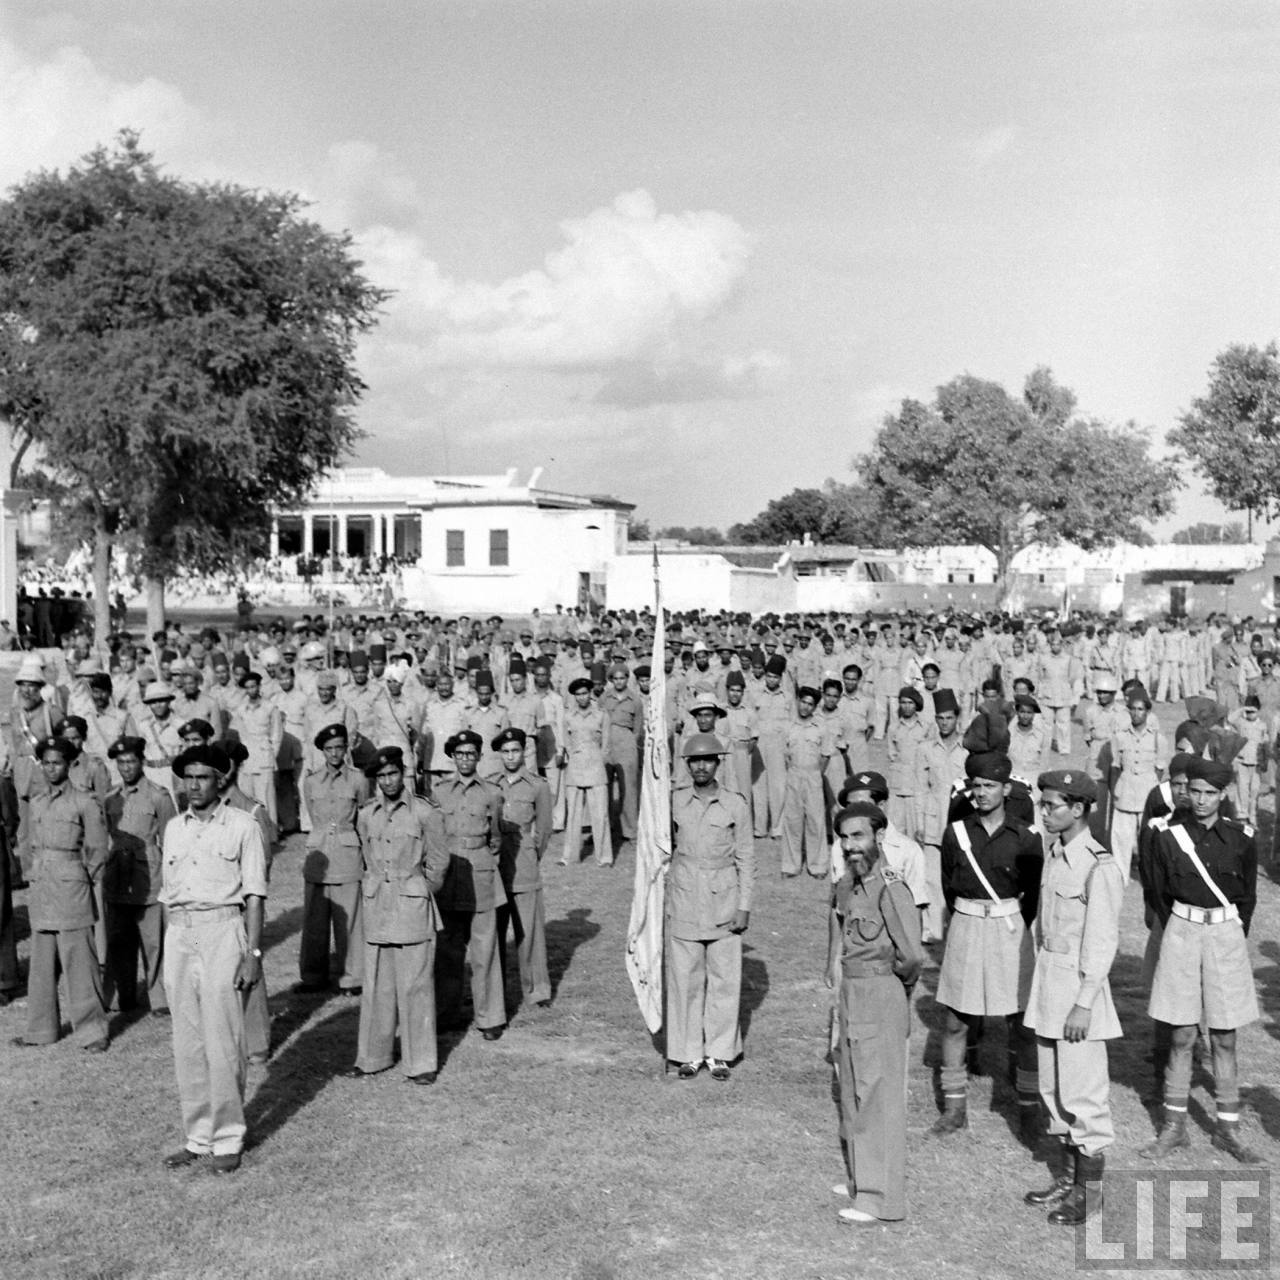 Razakars, a private militia organized by Qasim Razvi to support the rule of Nizam Mir Osman Ali Khan | Operation Polo | Hyderabad Police Action | Annexation of Hyderabad, Hyderabad (Deccan), Telangana, India | Rare & Old Vintage Photos of Operation Polo, Hyderabad (Deccan), Telangana, India (1948)